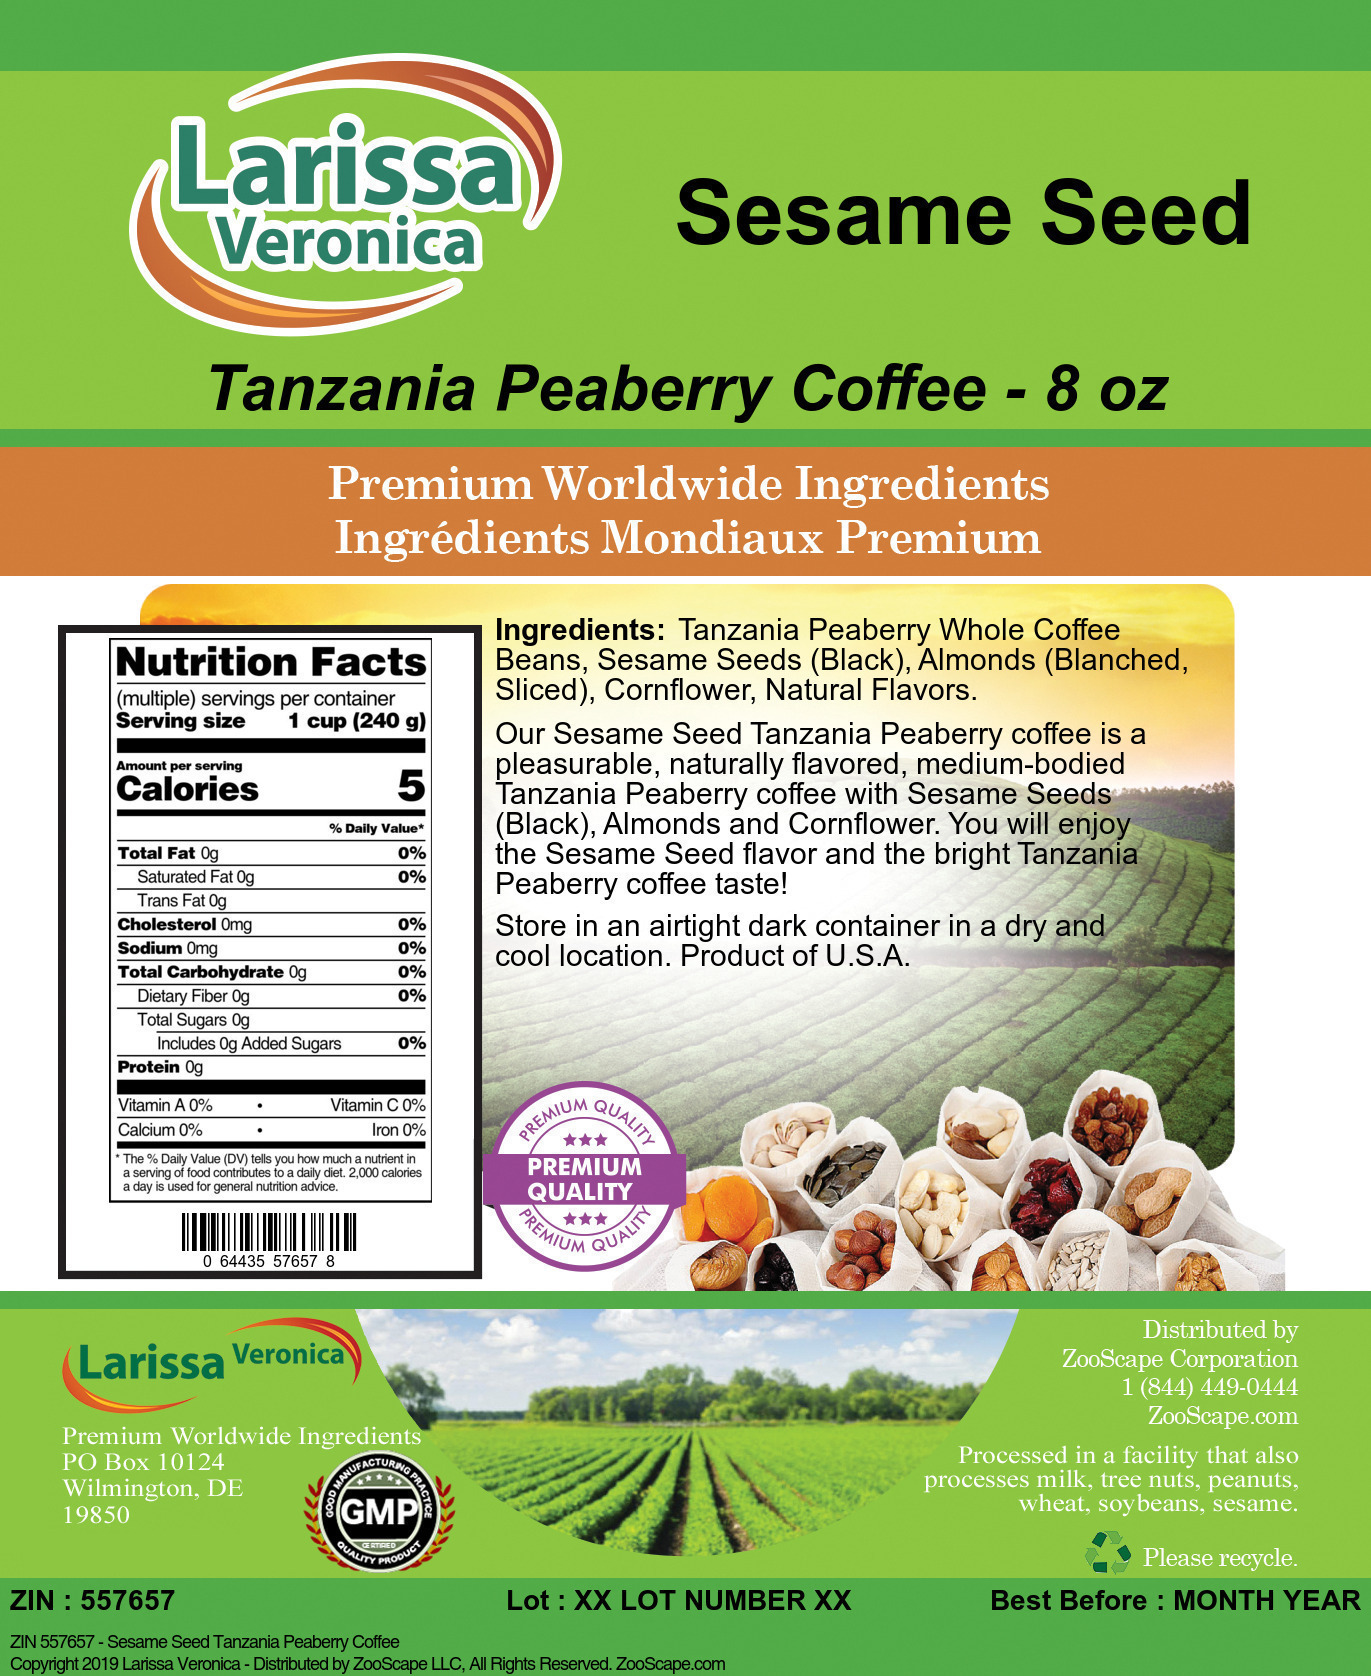 Sesame Seed Tanzania Peaberry Coffee - Label